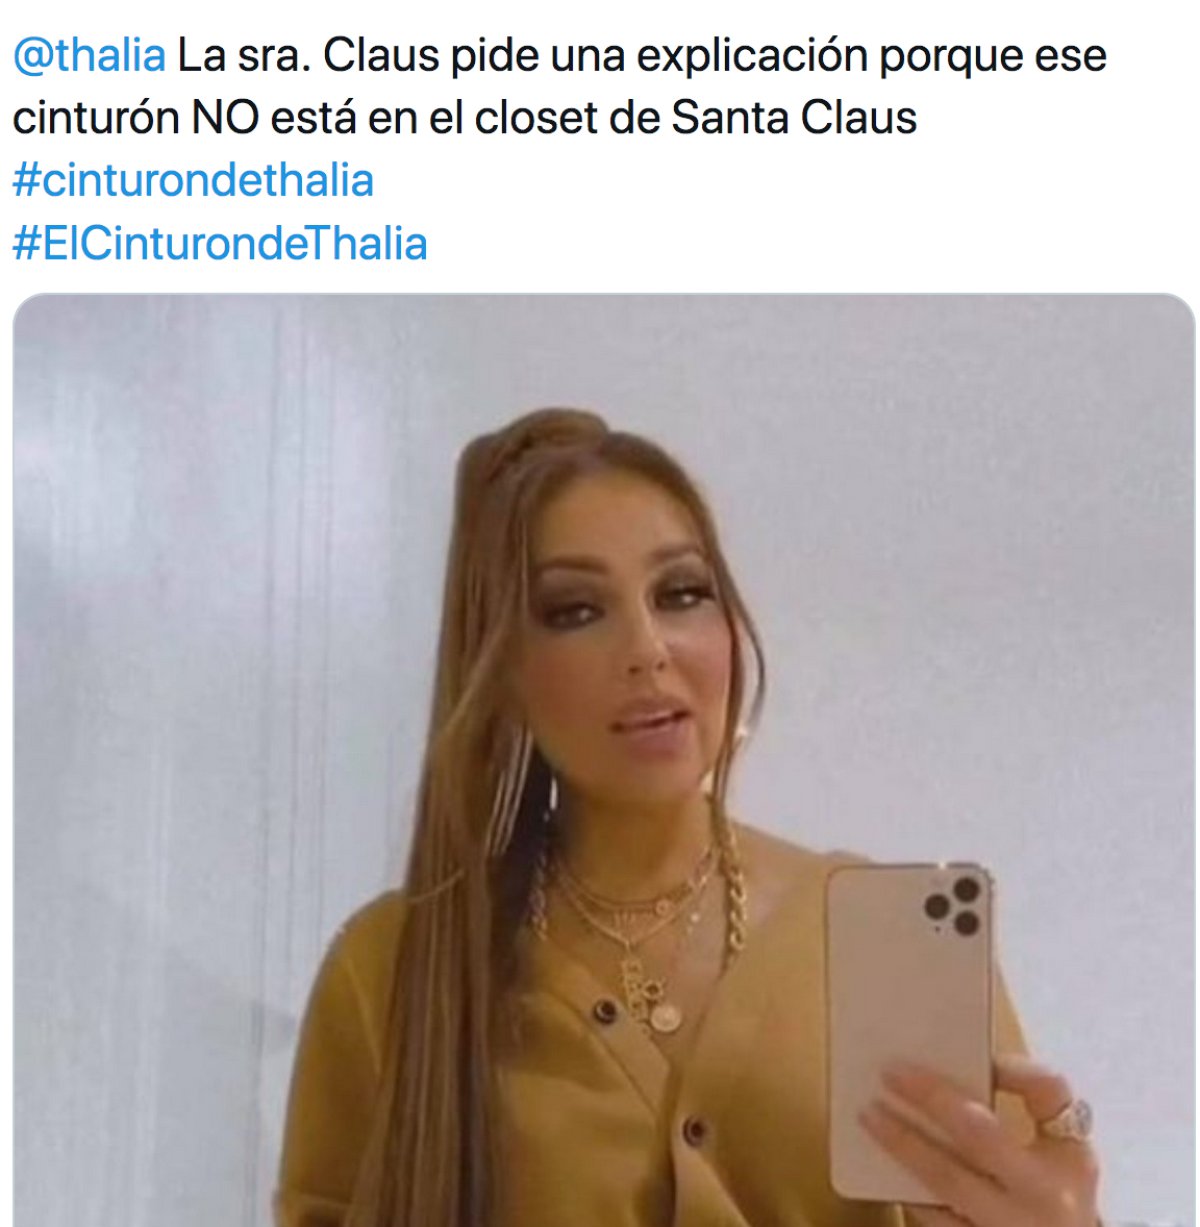 Thalía se convierte en meme por enorme cinturón